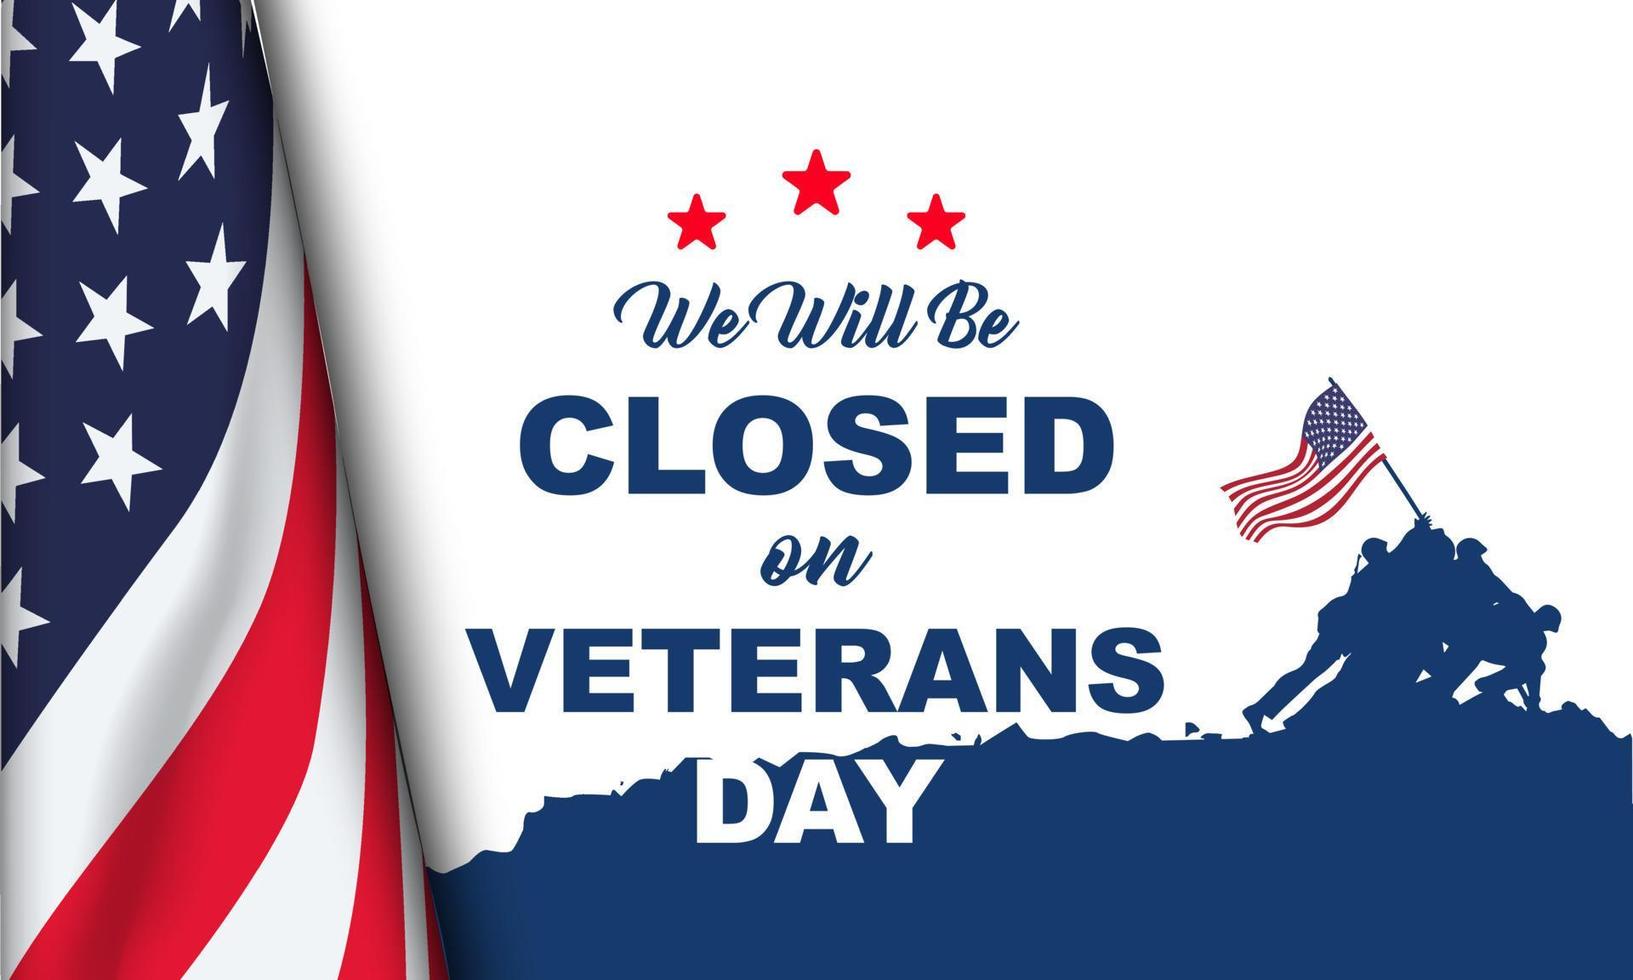 Veterans day Background Design. Greeting Card, Banner, Poster. Vector Illustration.